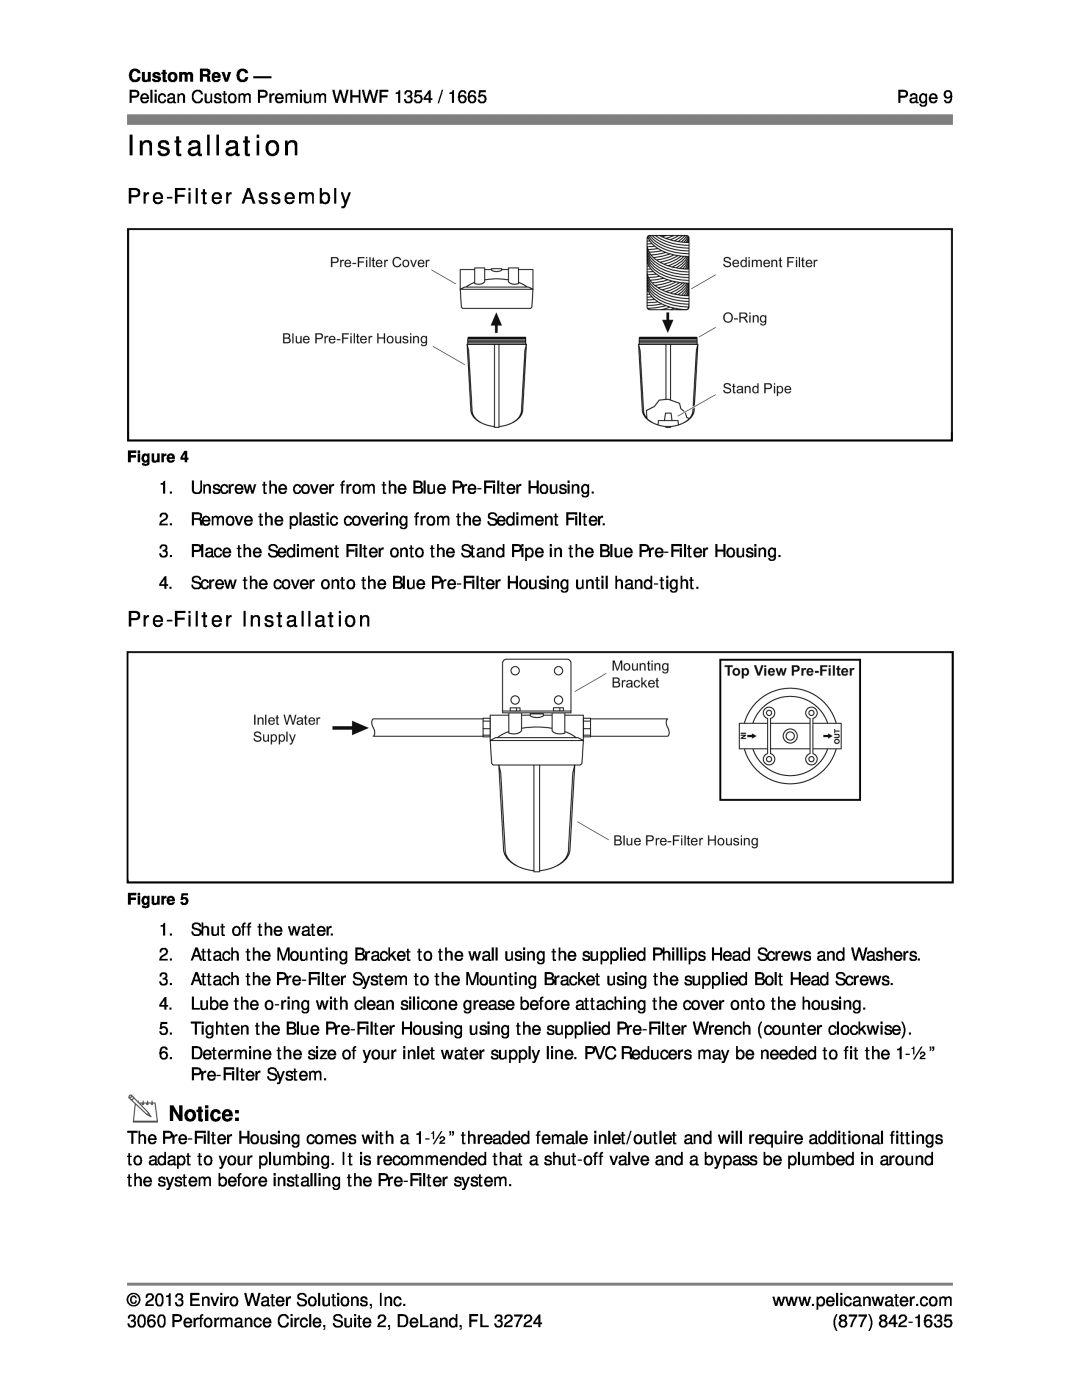 Pelican WHWF 1354 owner manual Pre-FilterAssembly, Pre-FilterInstallation, Custom Rev C 